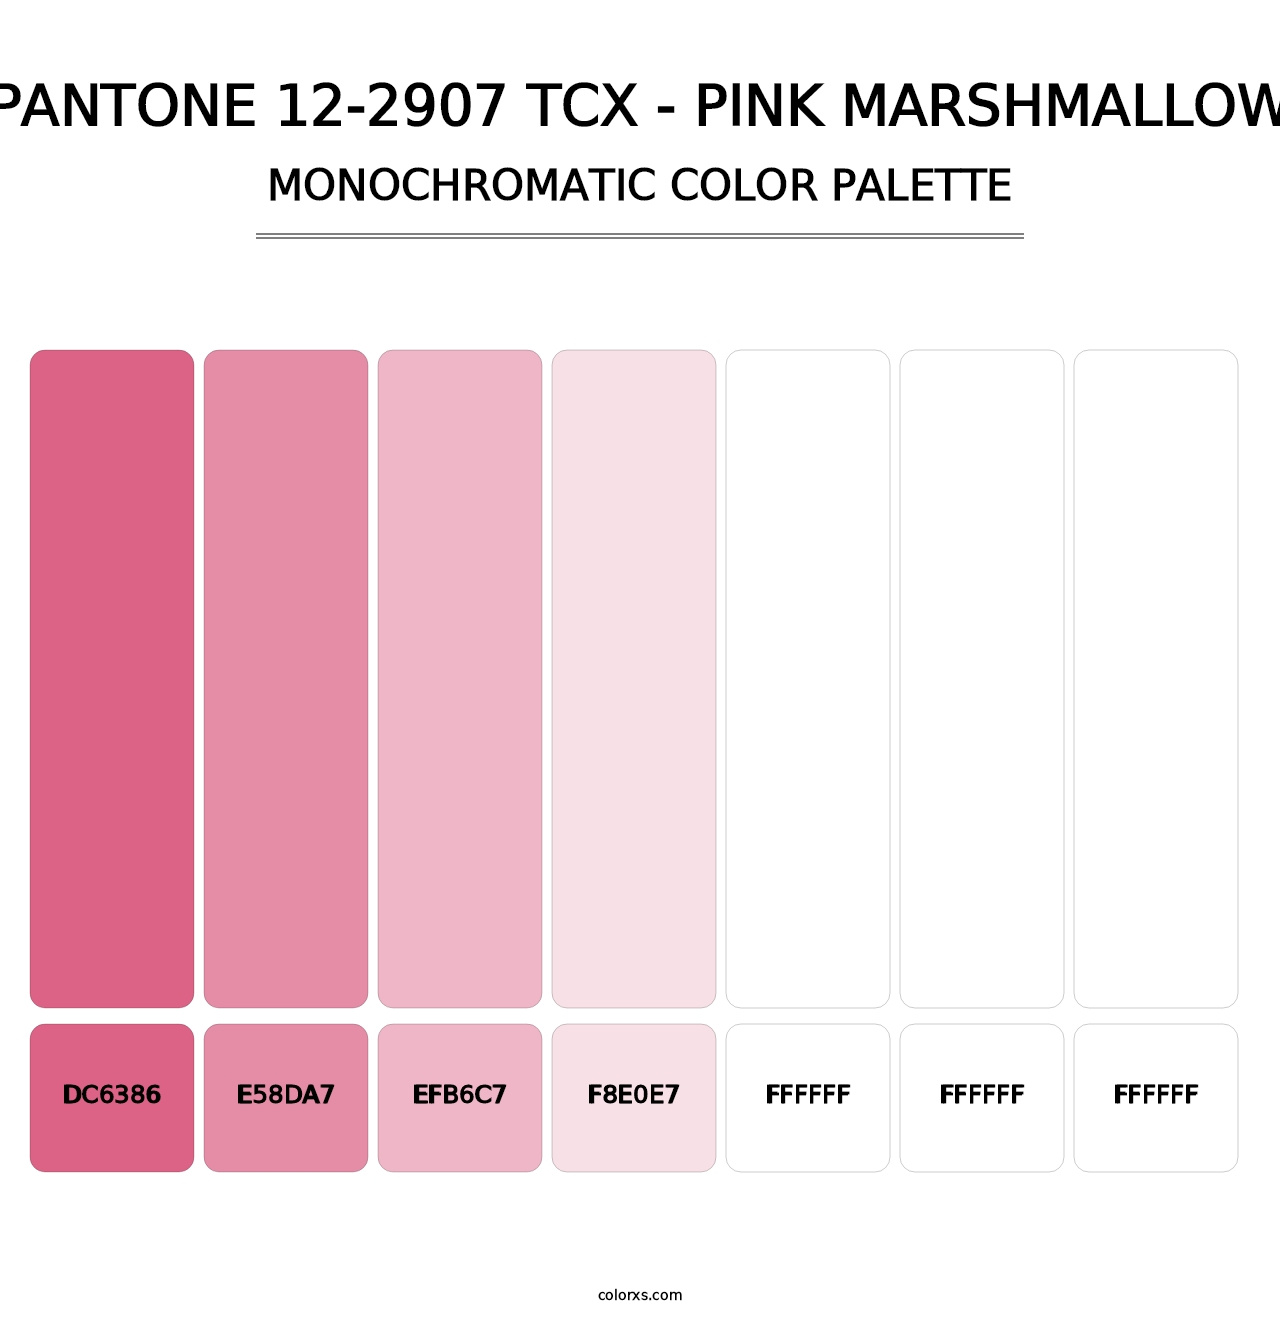 PANTONE 12-2907 TCX - Pink Marshmallow - Monochromatic Color Palette